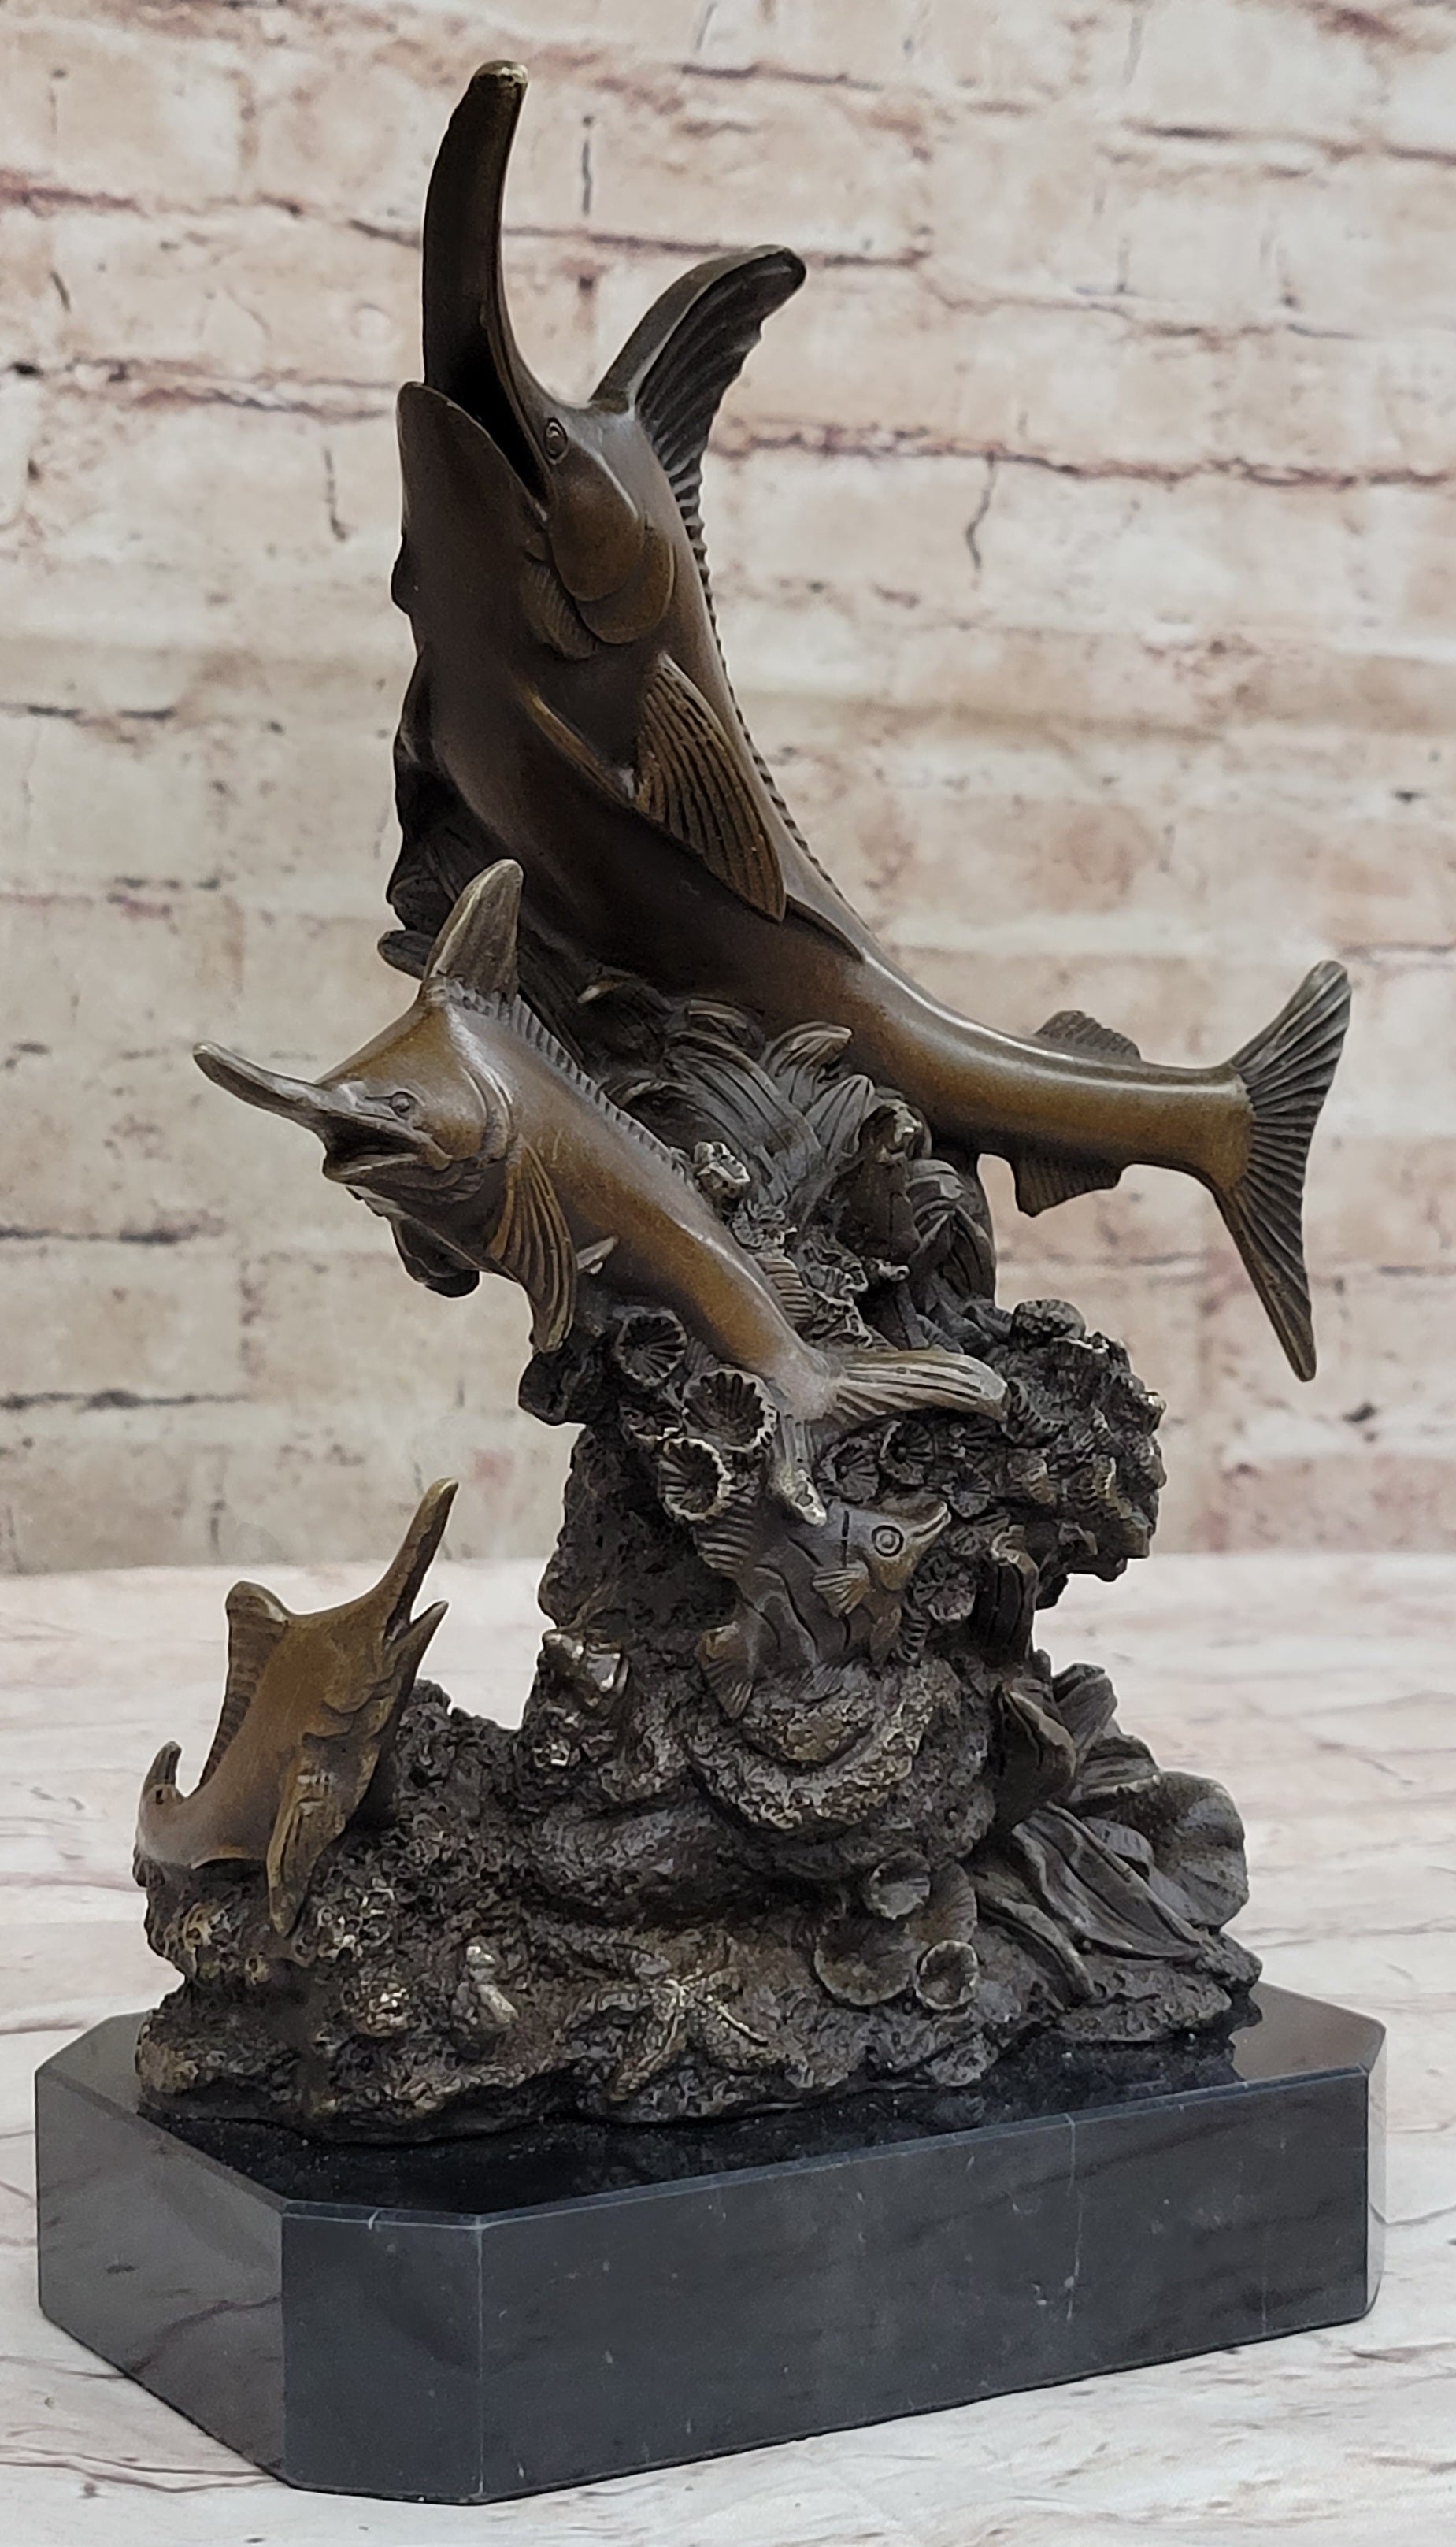 Fish sculpture : photos de stock (18 174 images)